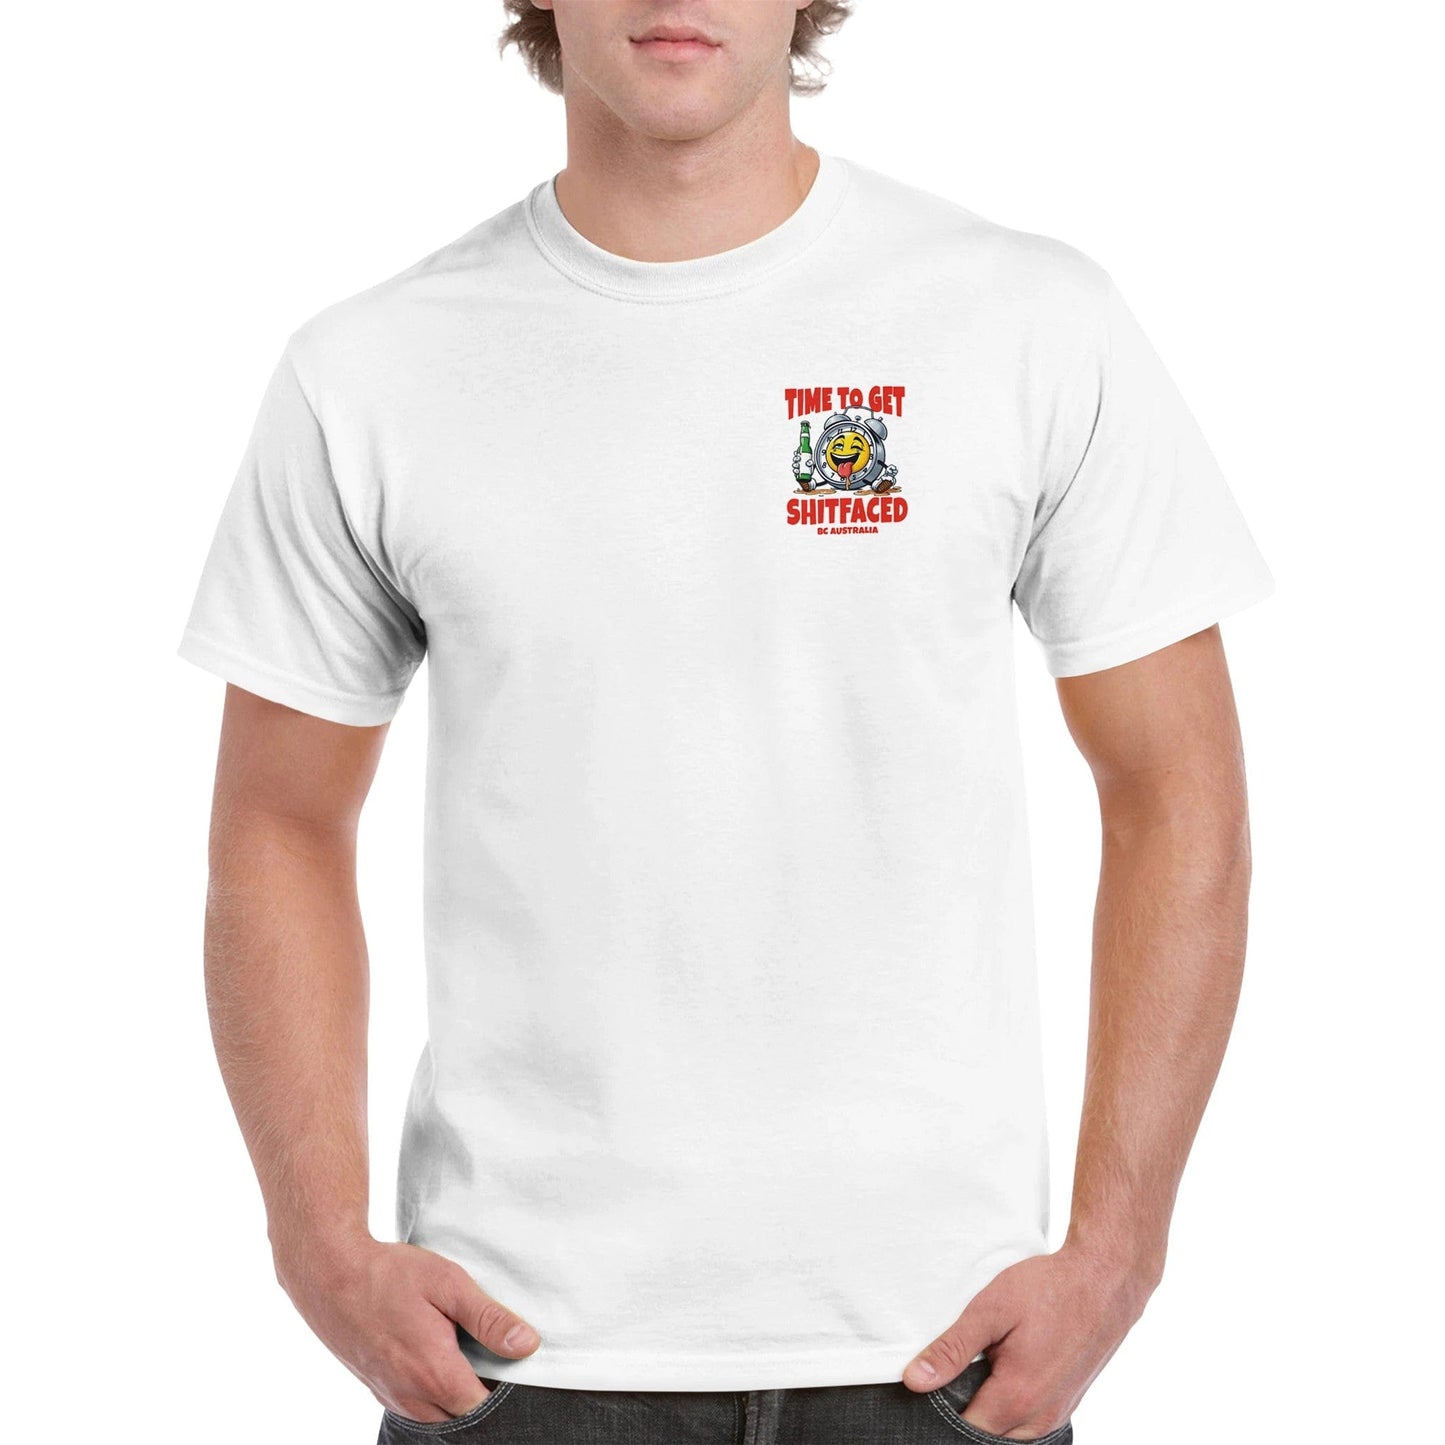 Get Shitfaced T-shirt Graphic Tee Australia Online